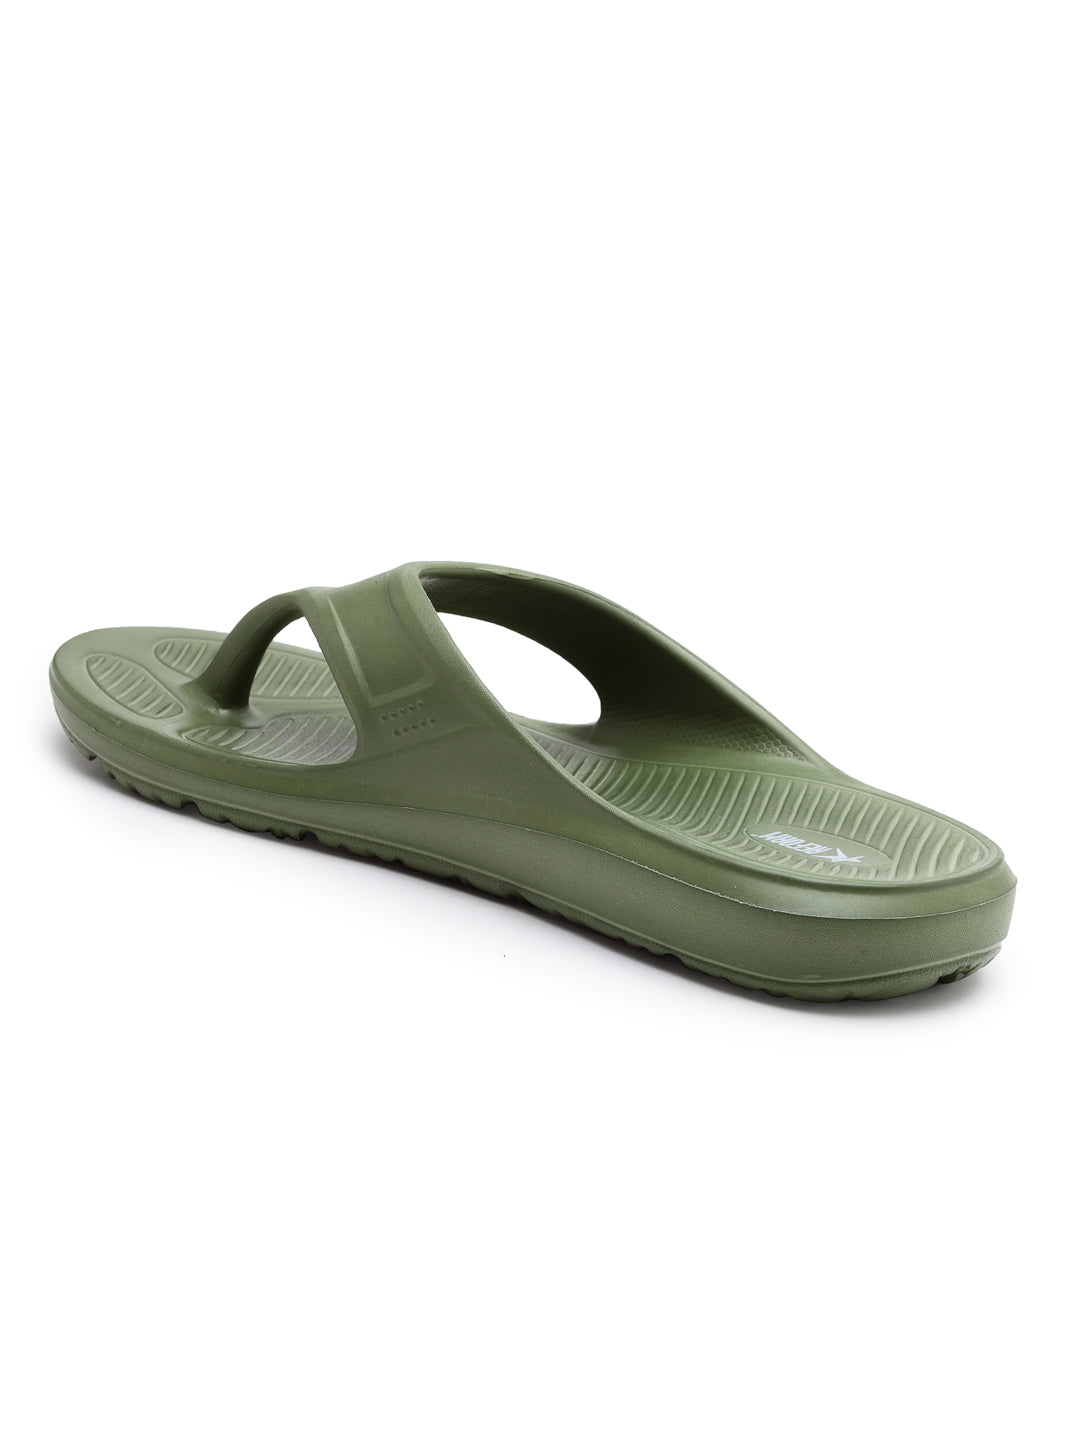 Olive Solid EVA Rubber Slip On Casual Slippers For Men